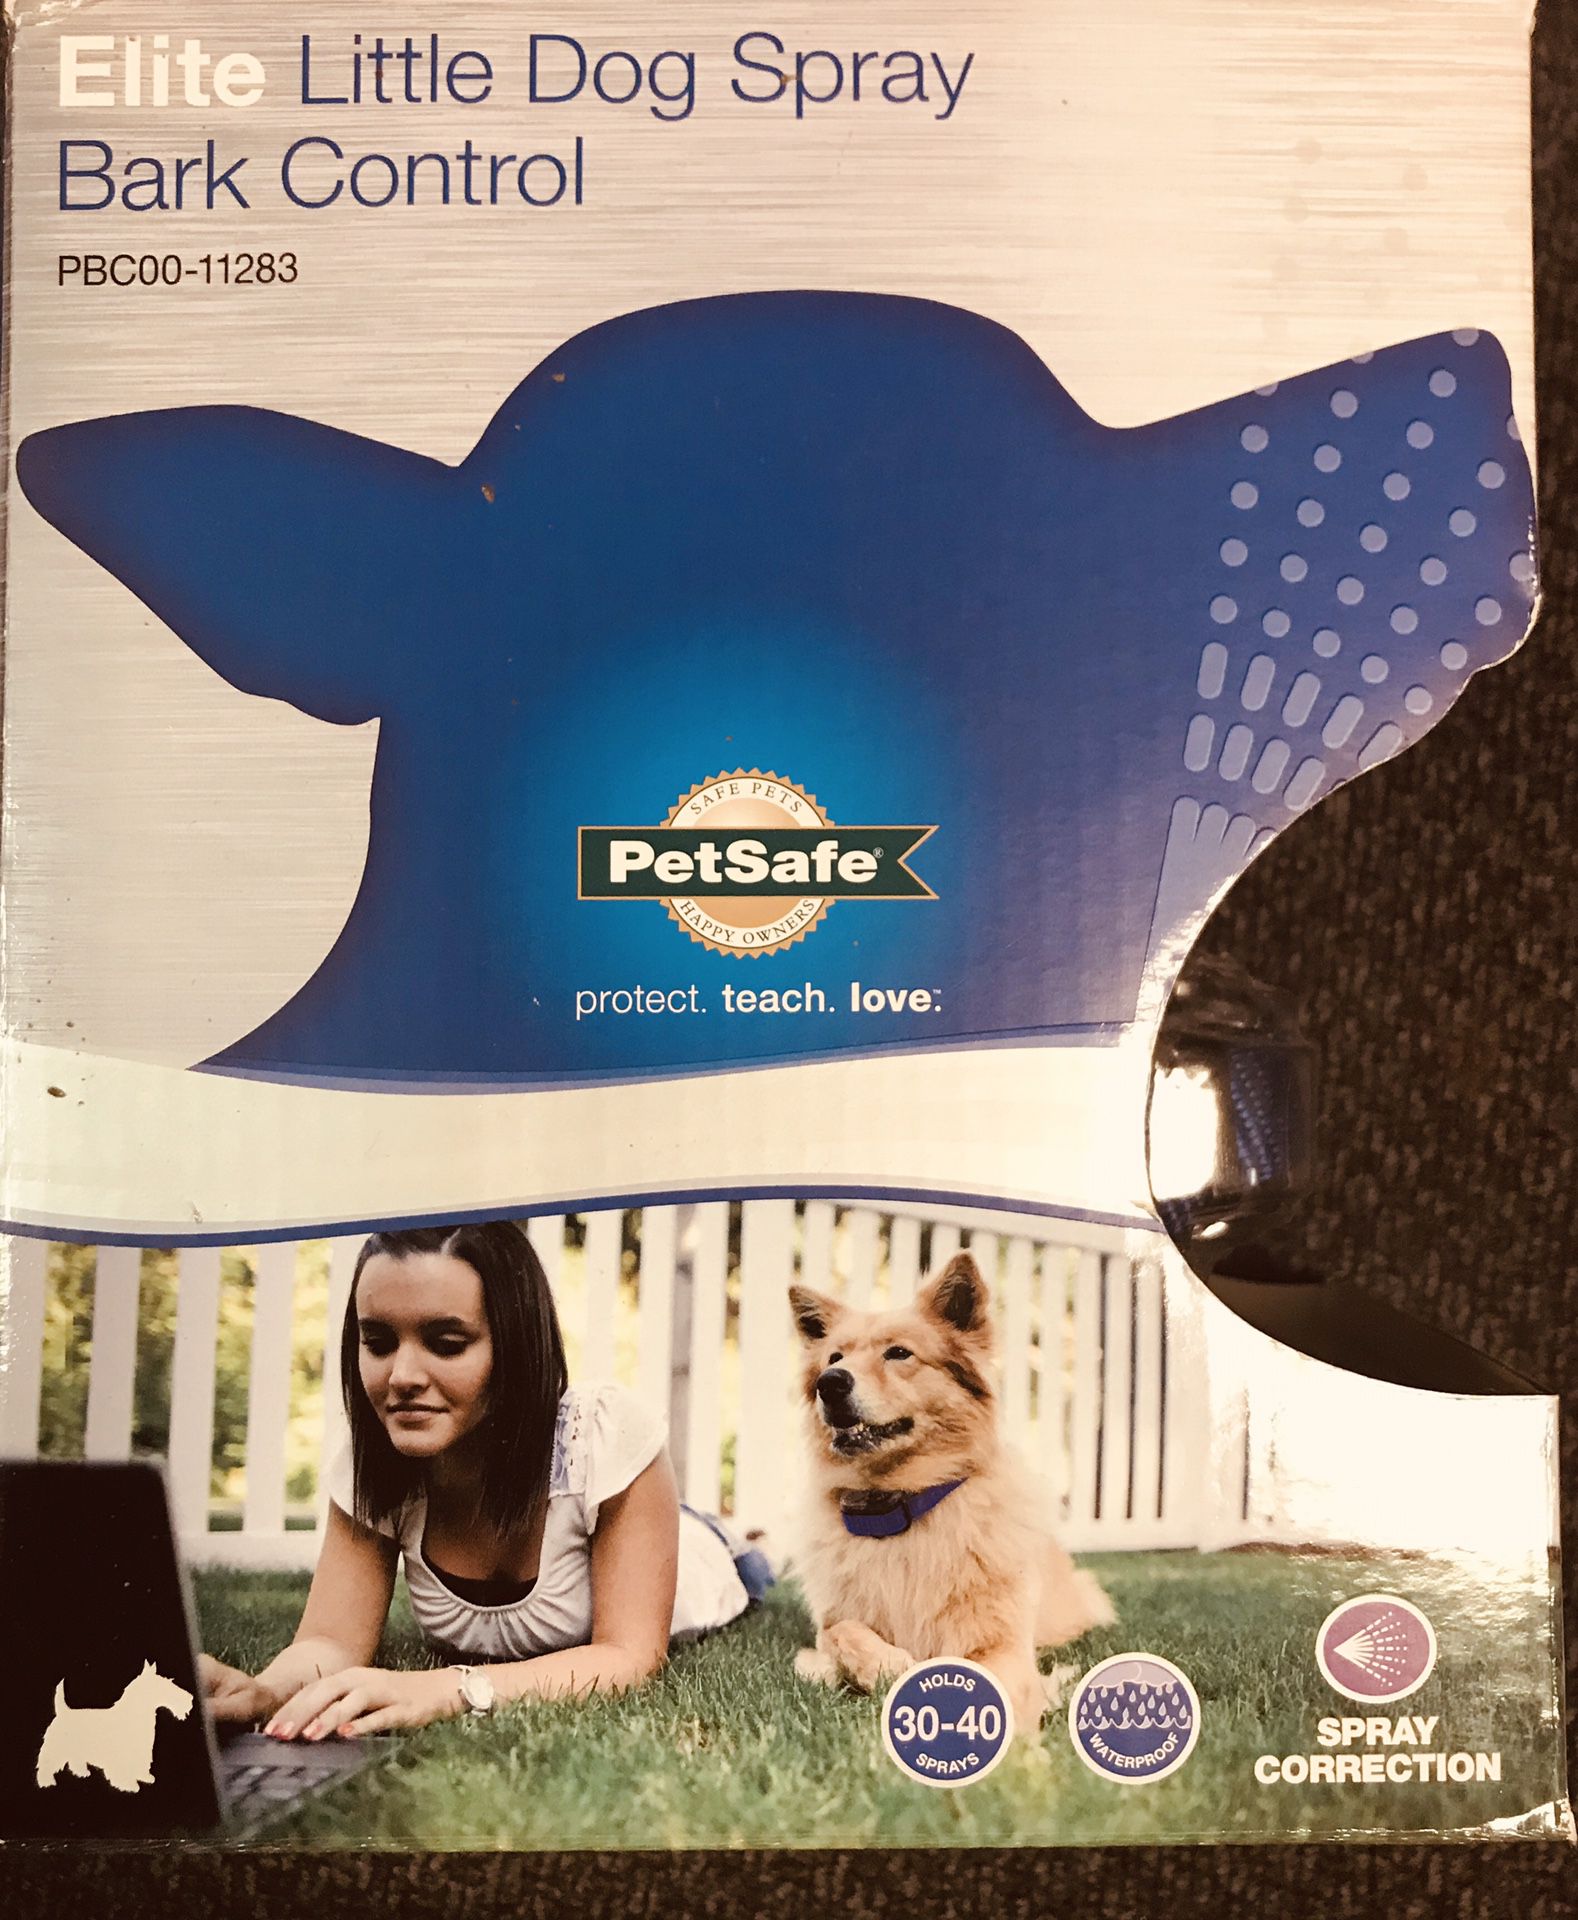 PetSafe Elite Little Dog Spray Bark Control PBC00-11283 - normally $90